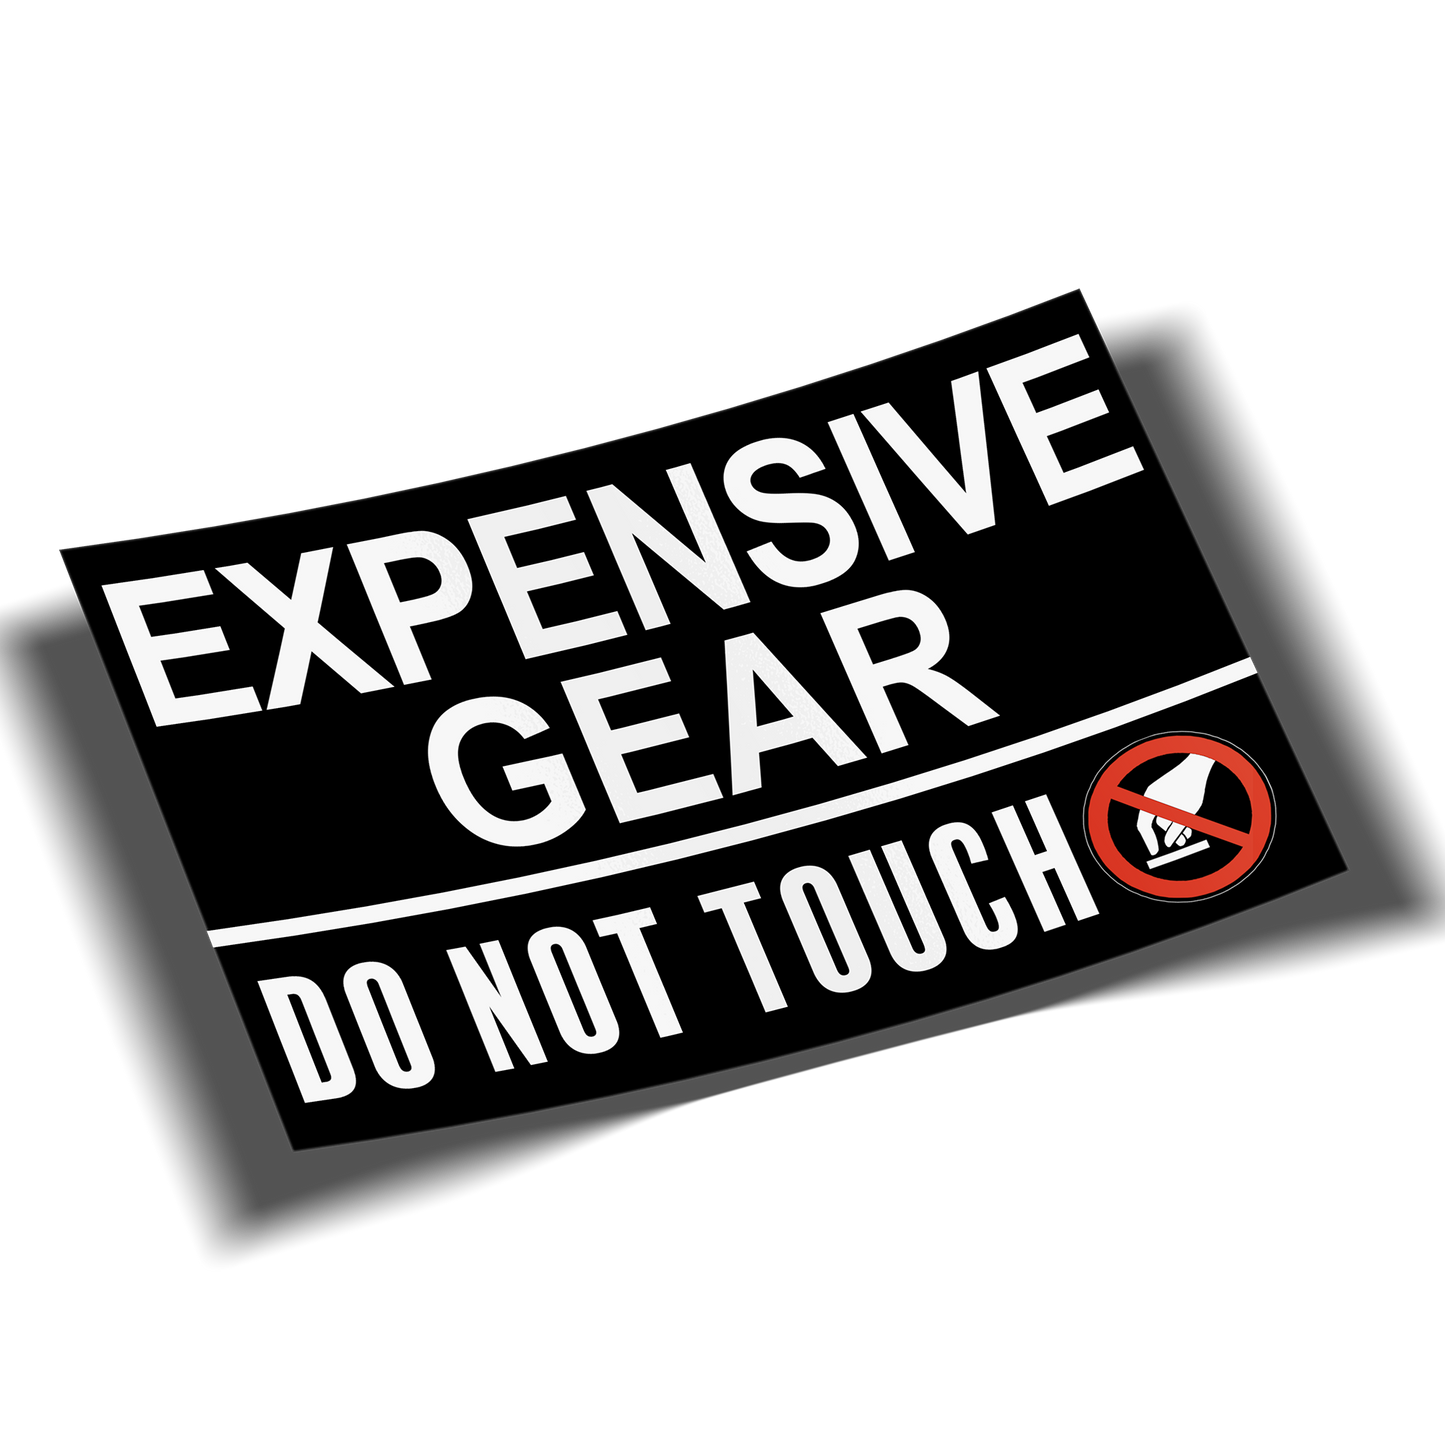 Expensive Gear Warning Sticker